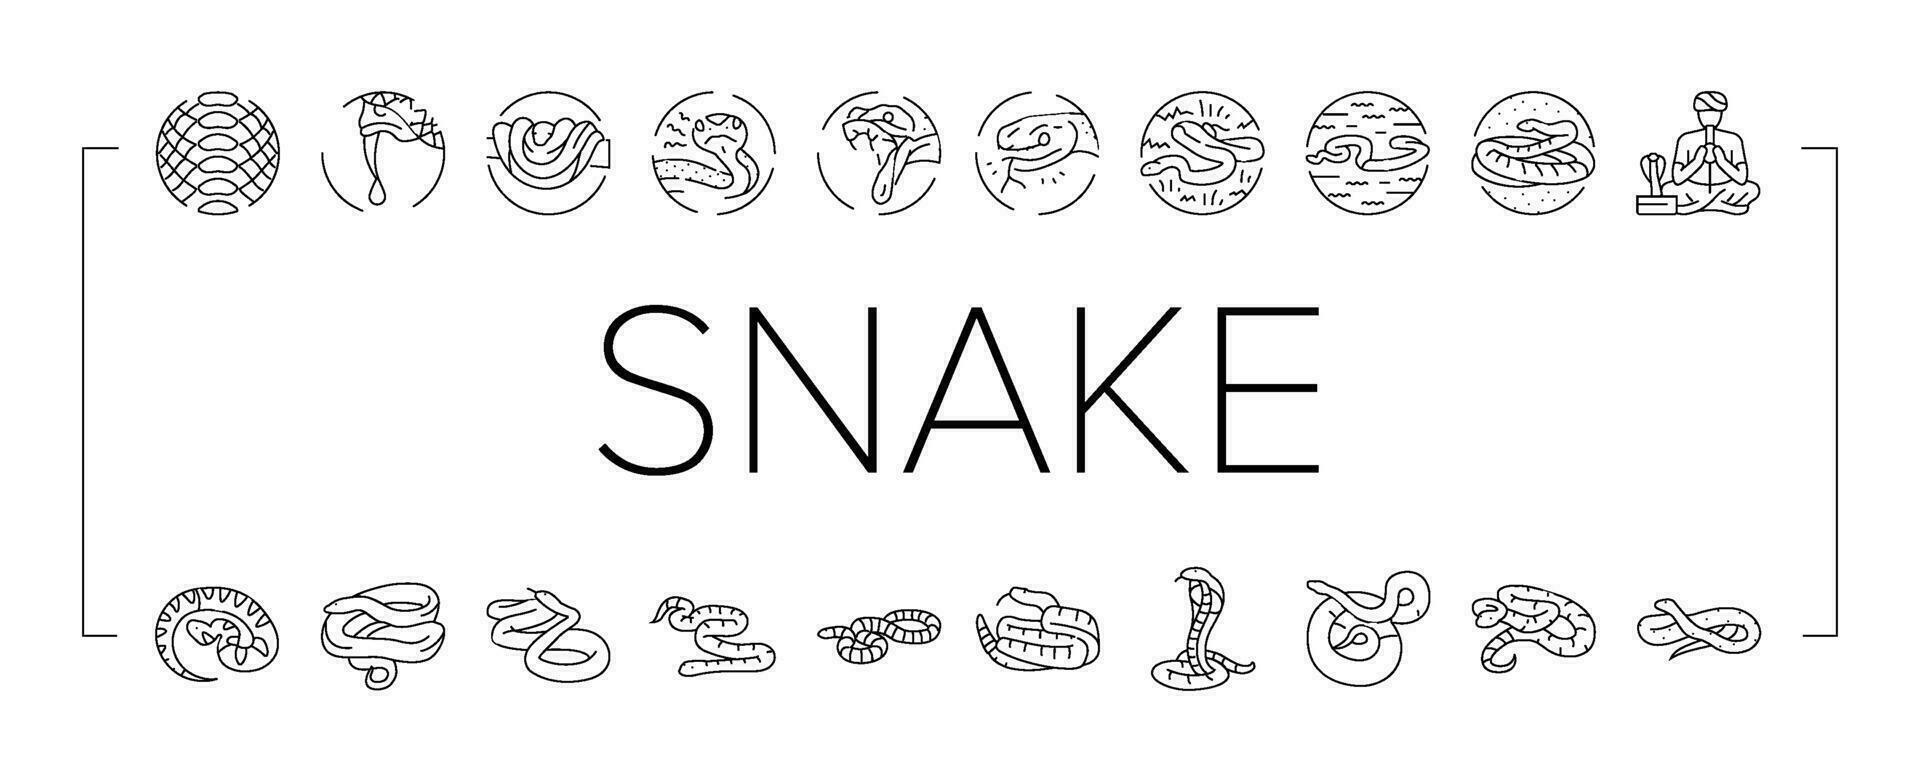 snake black serpent viper cobra icons set vector